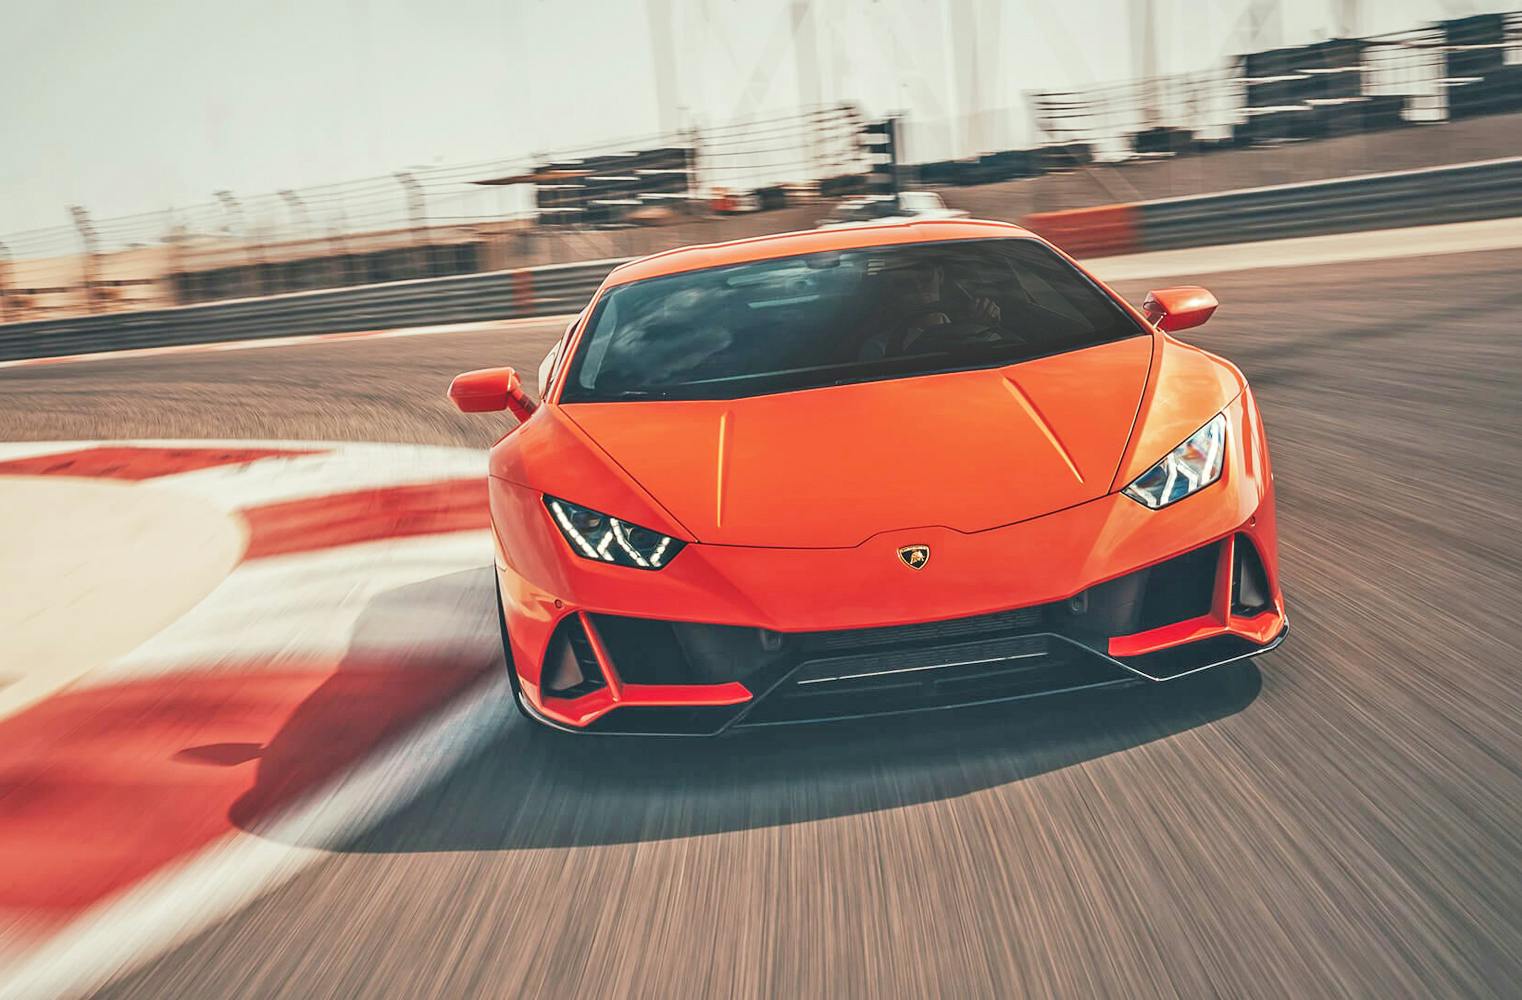 Lamborghini Huracán Evo selber fahren | 2 Runden Rennstrecke